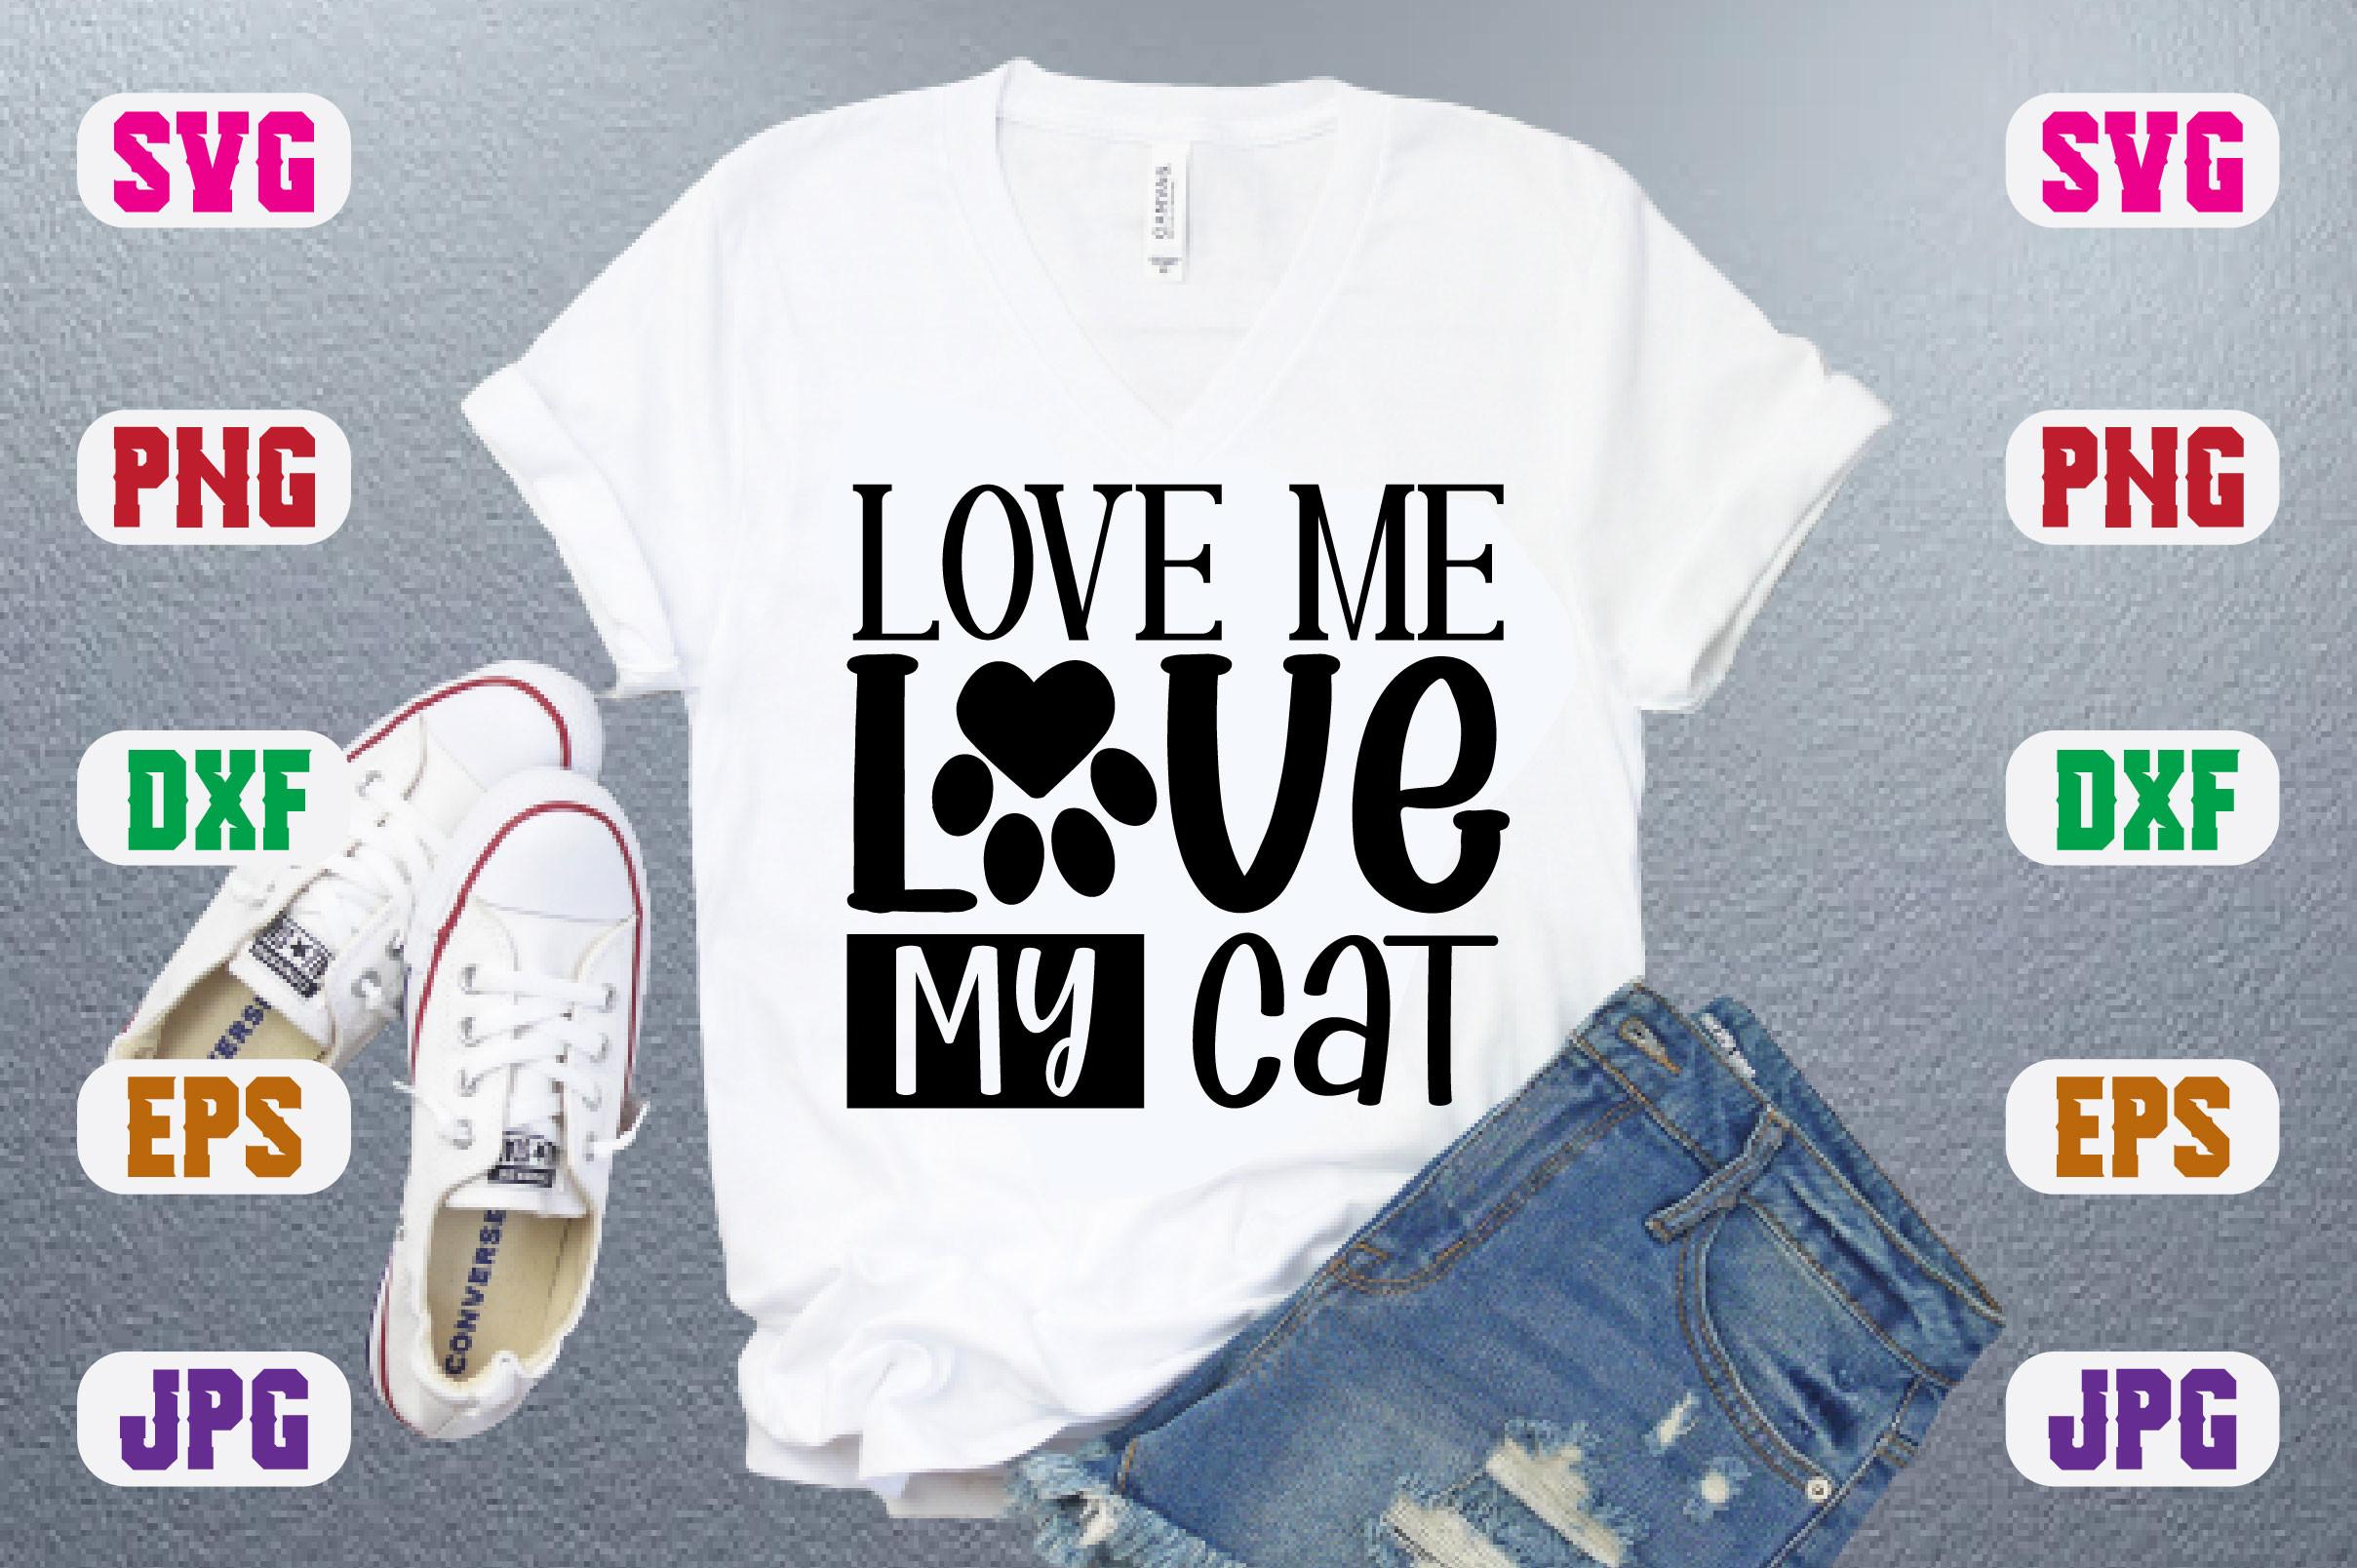 Love Me Love My Cat